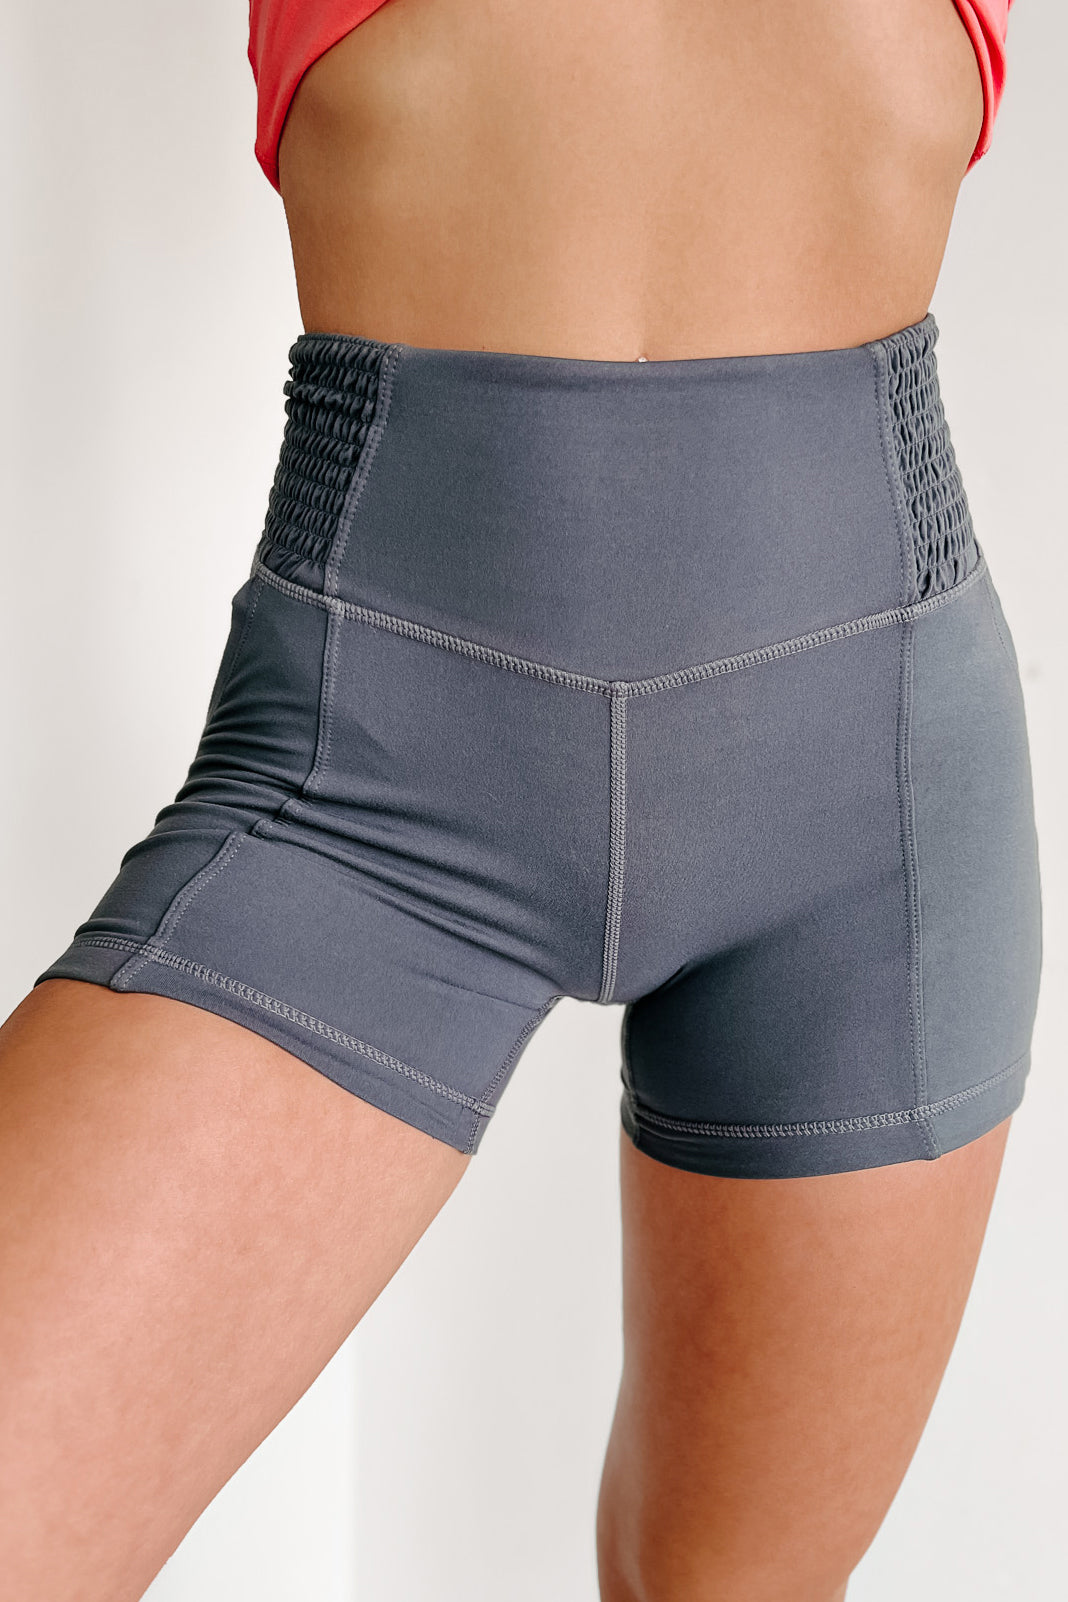 Make Yourself Comfortable Side Smocked Biker Shorts (Charcoal) - NanaMacs